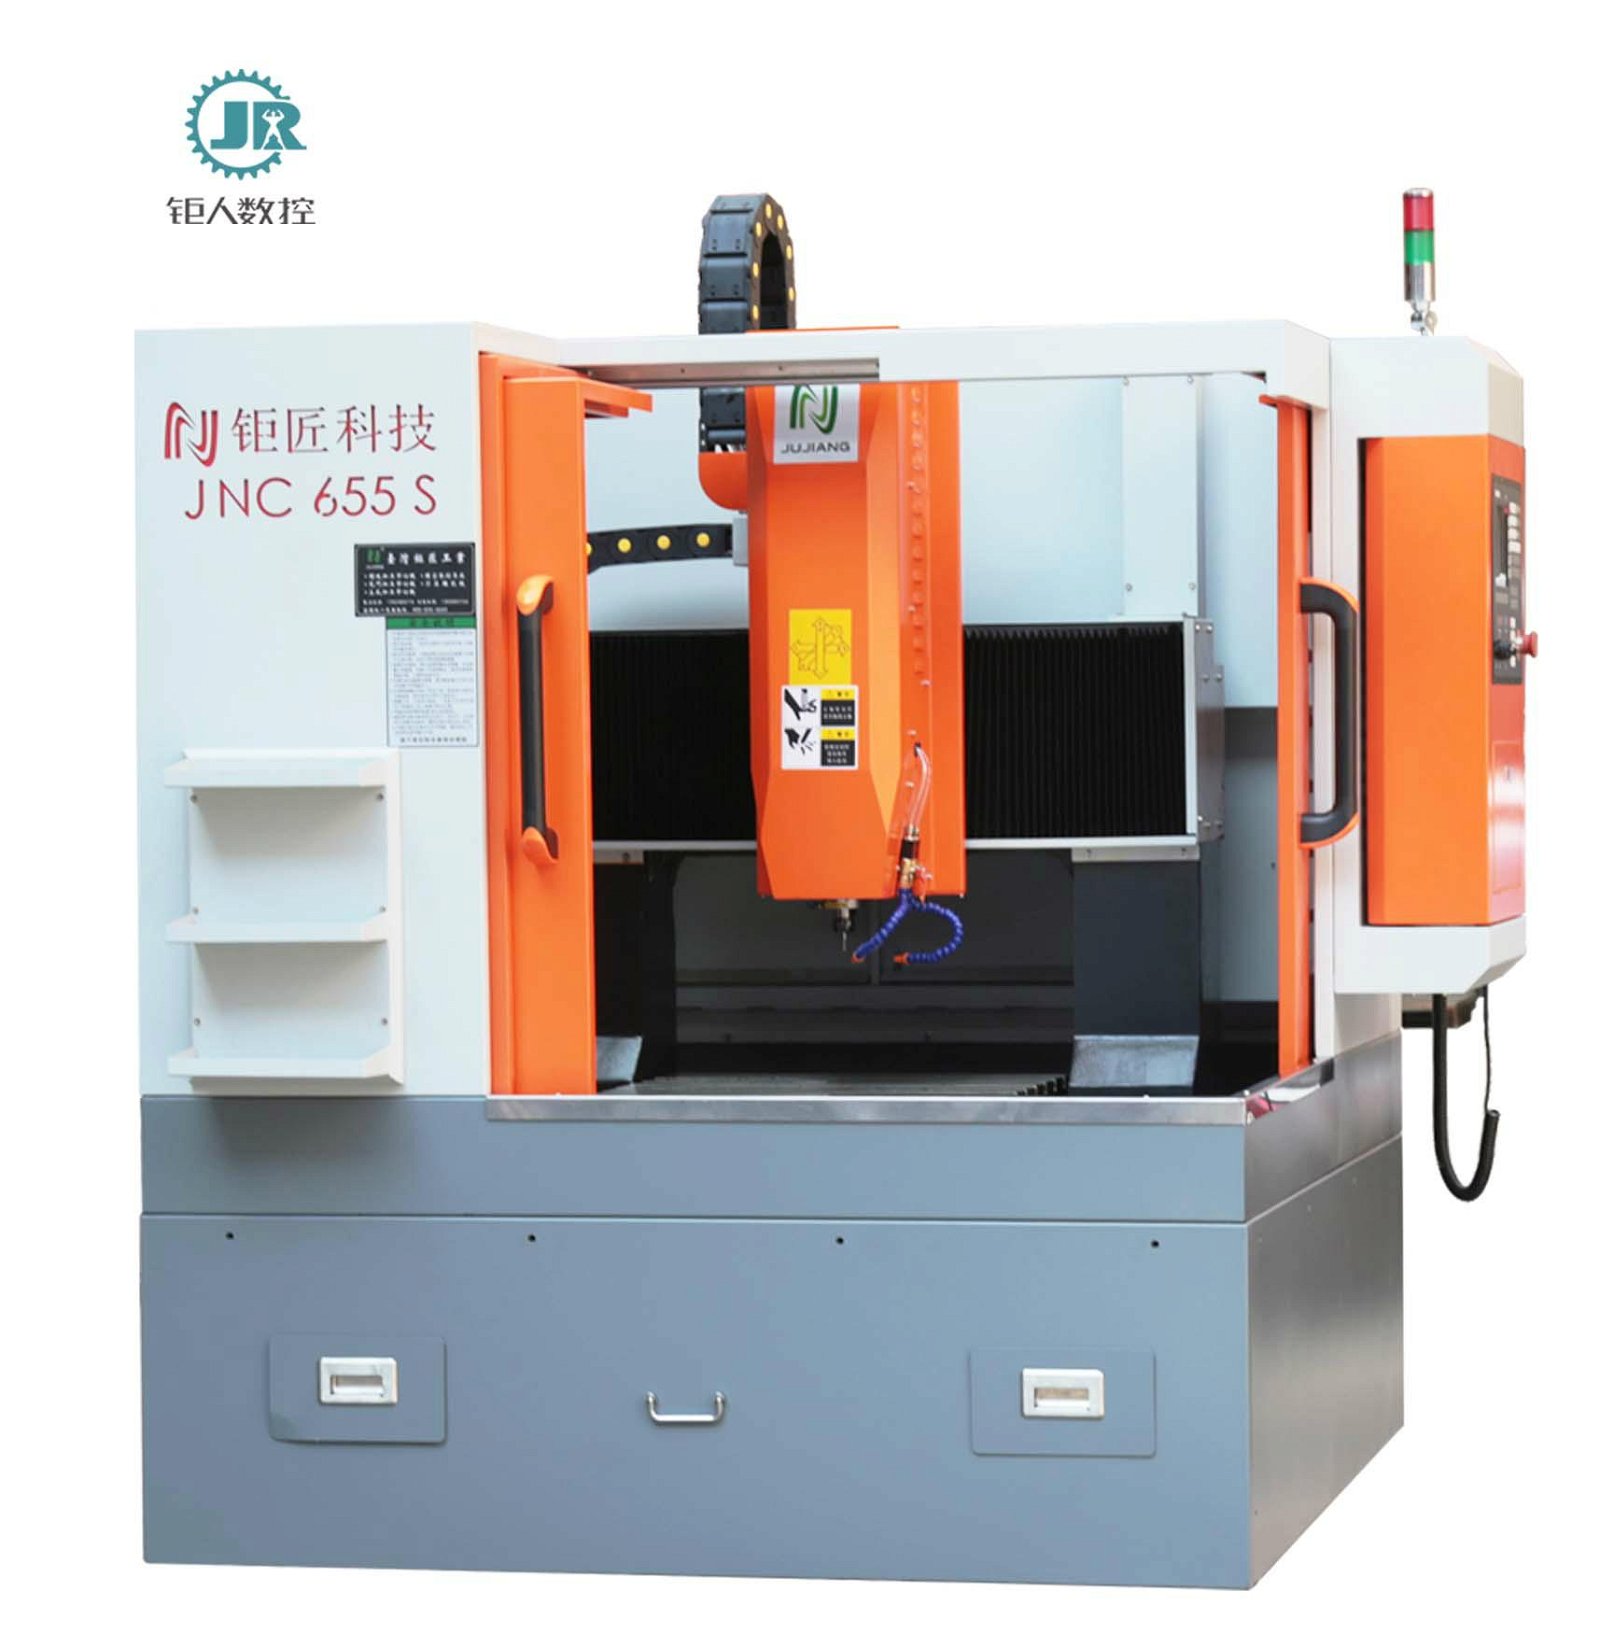 cnc machines,cnc engraving machine JNC655S